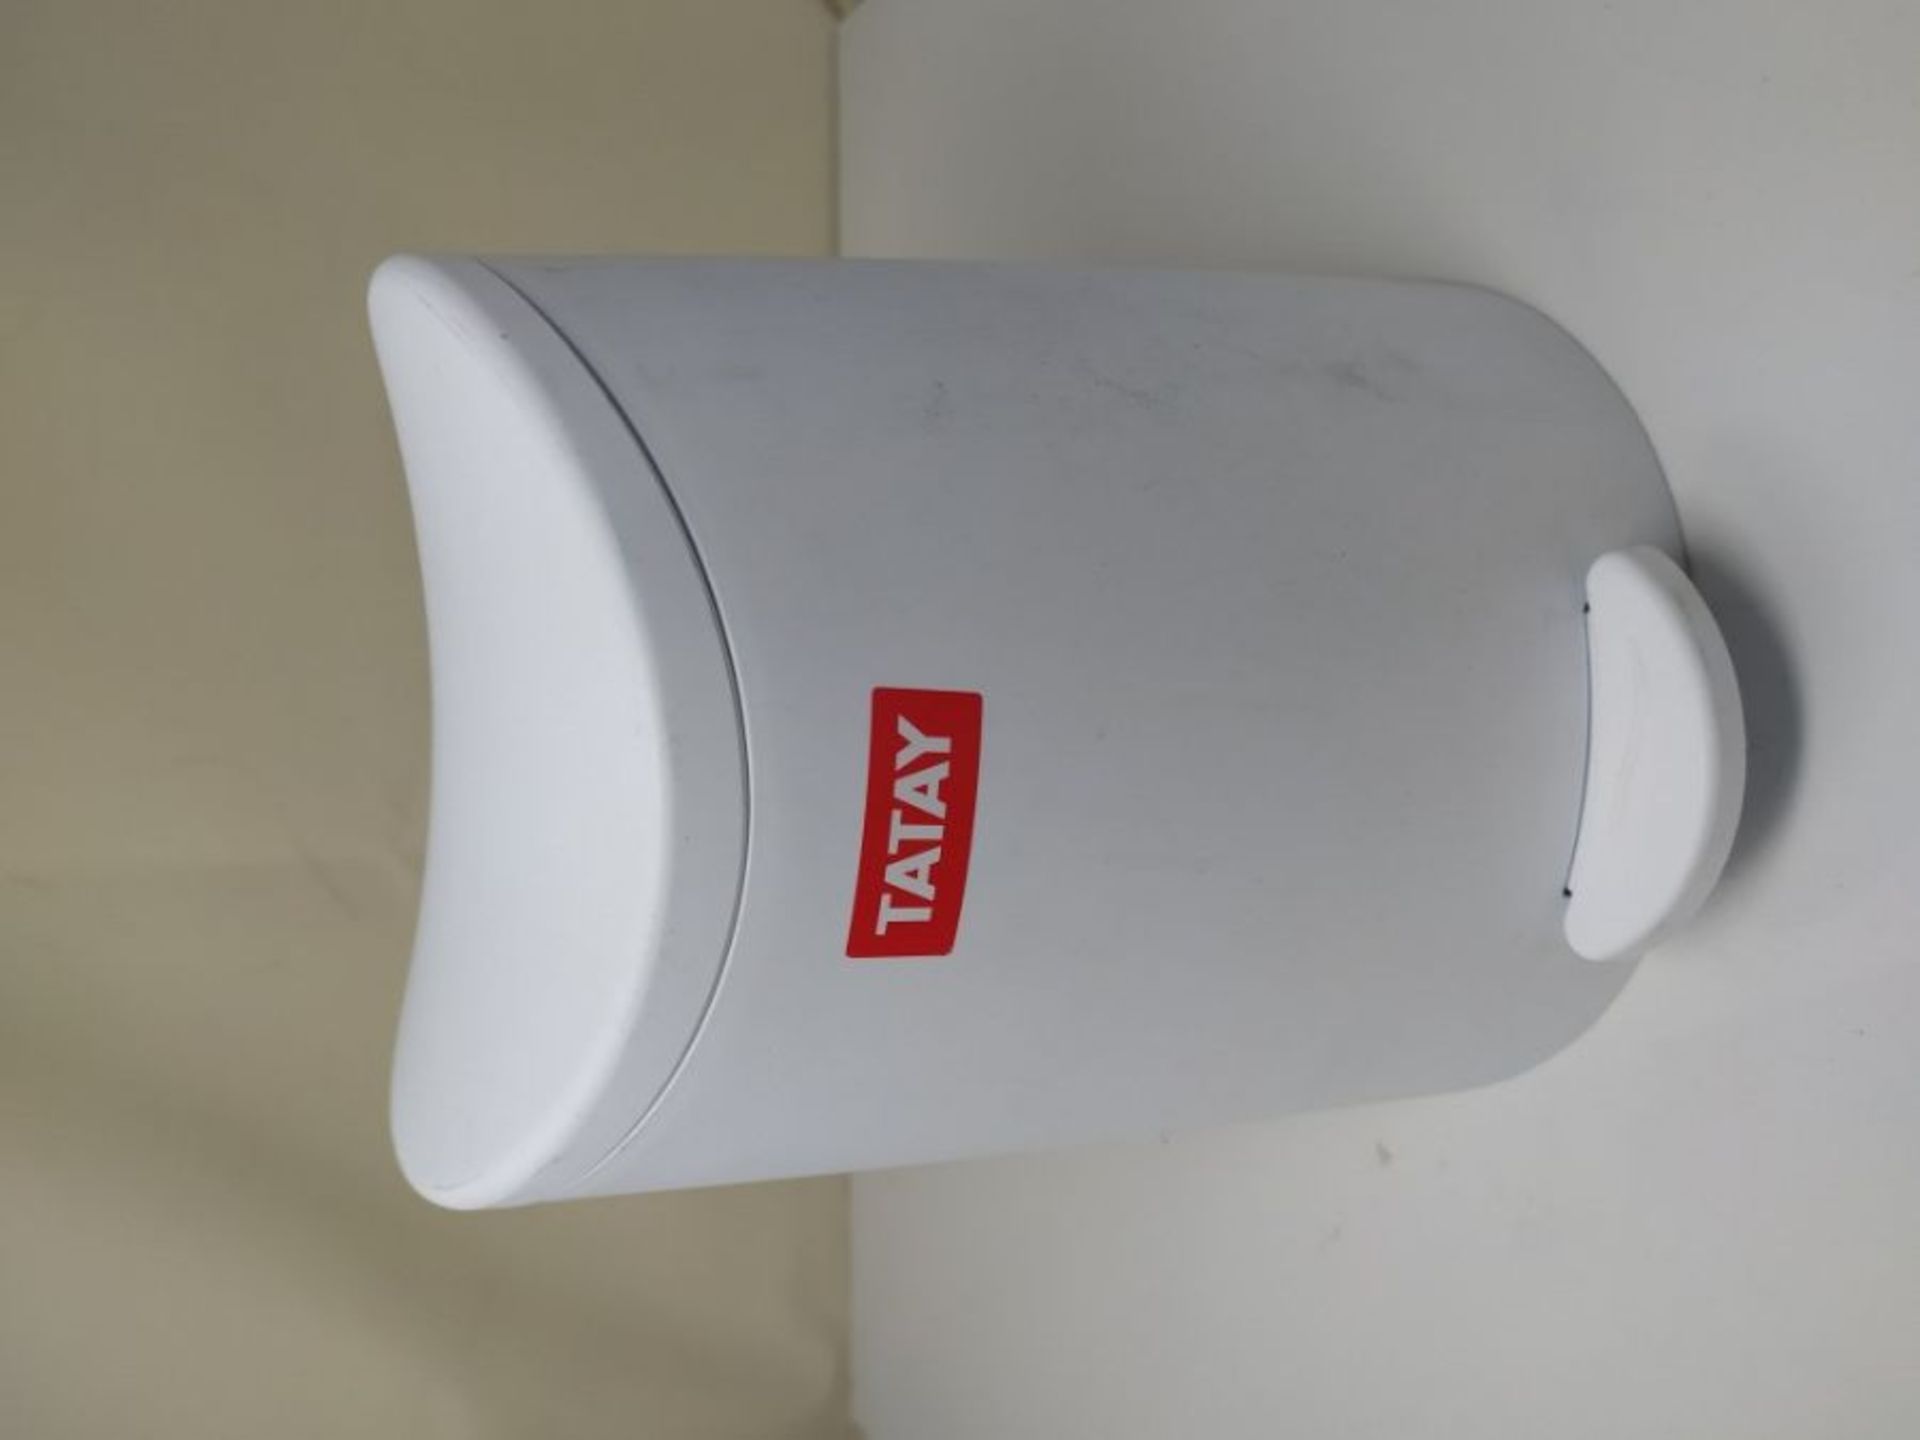 TATAY Standard Bathroom Pedal Bin, 3L, Polypropylene, White, One Size - Image 2 of 2